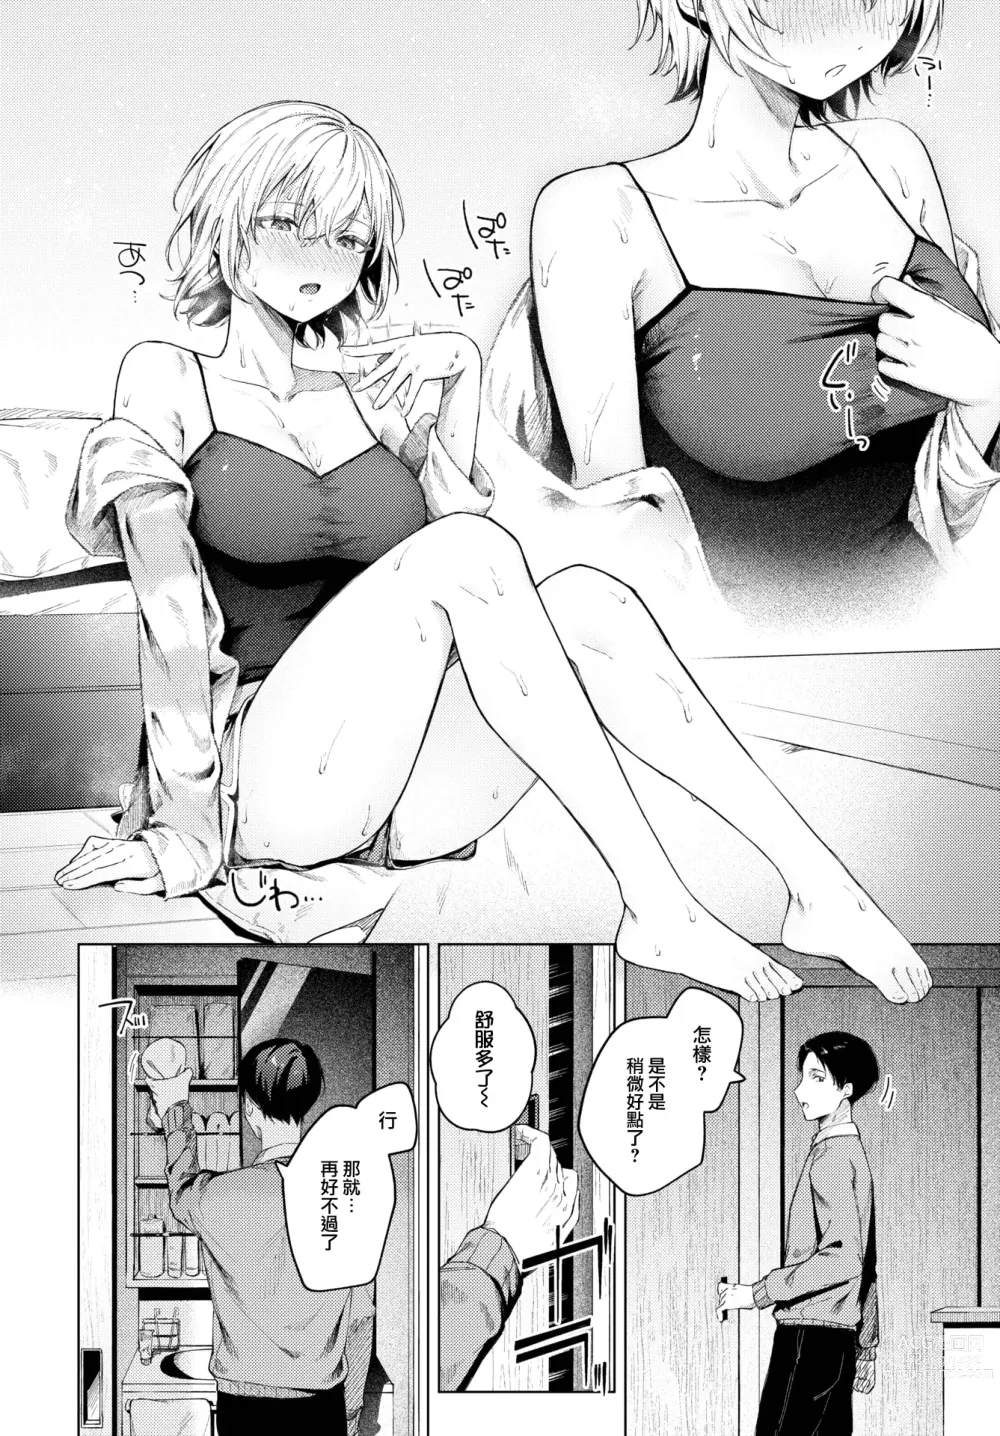 Page 9 of manga Fuyugomori